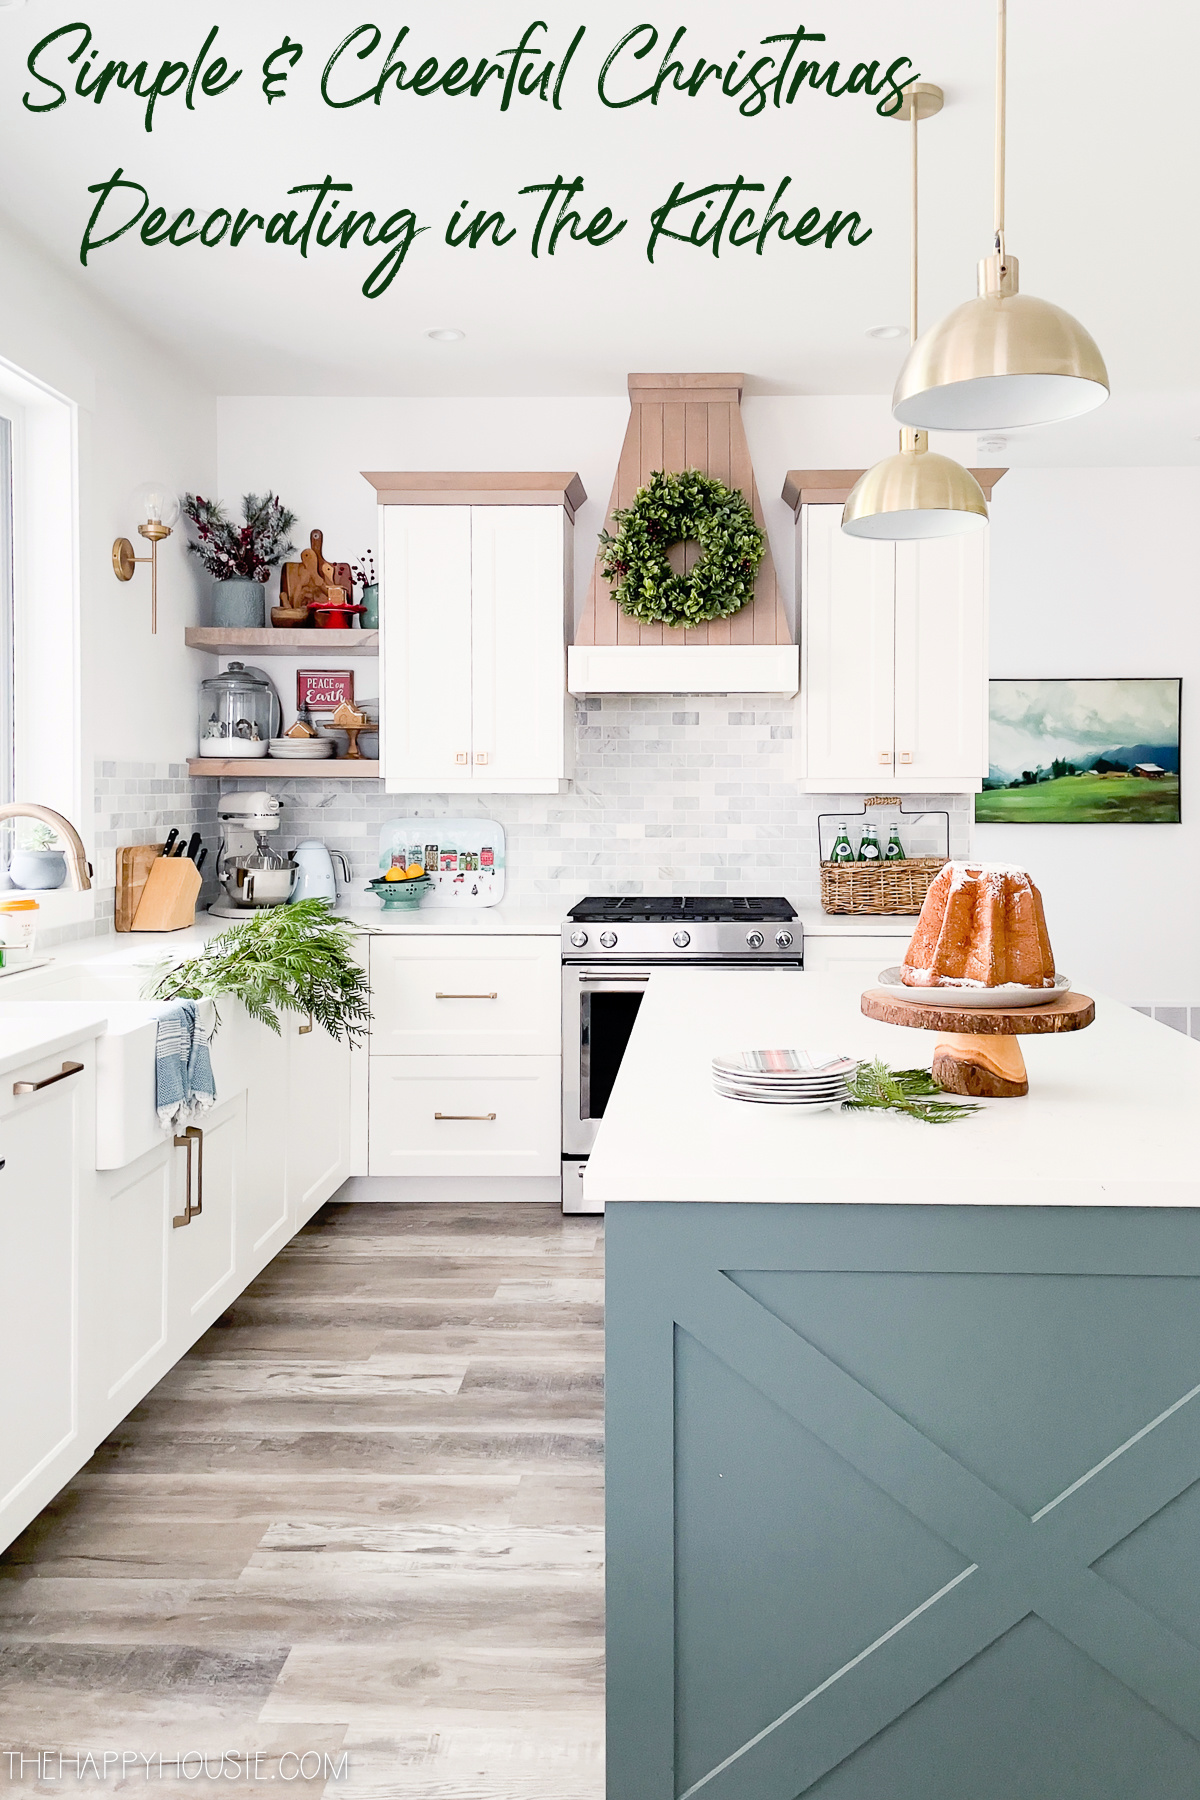 Cheerful & Simple Christmas Kitchen Decor Ideas   The Happy Housie